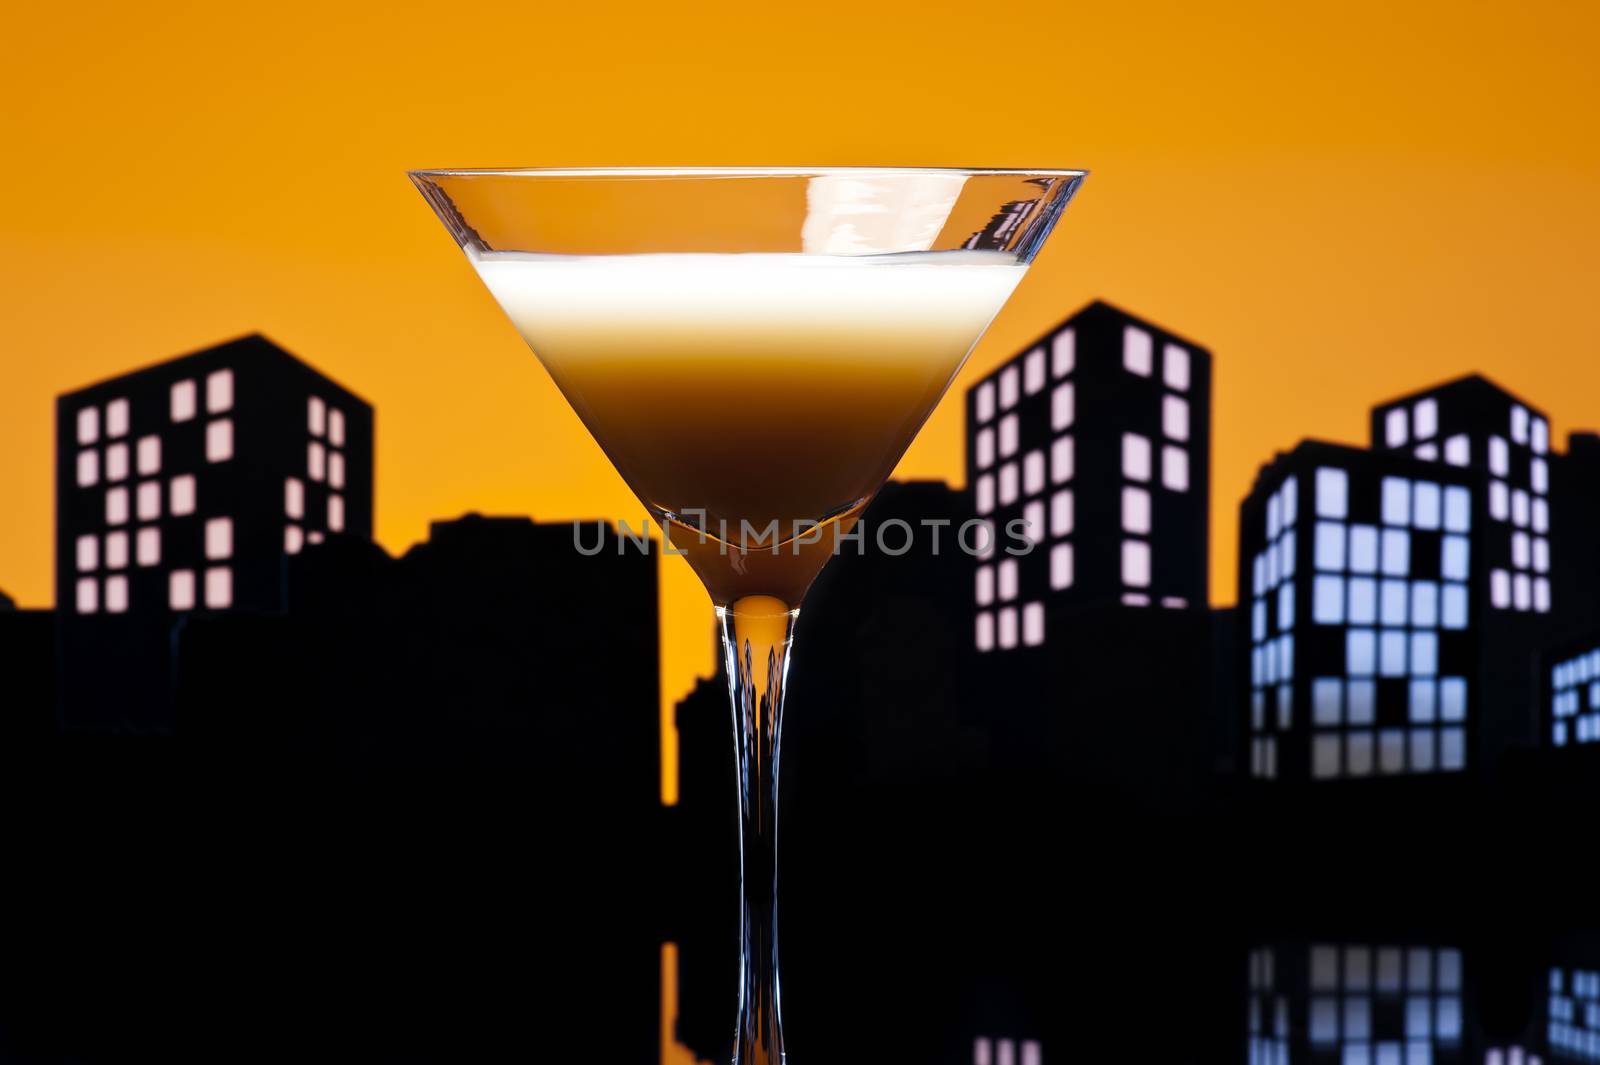 Metropolis coffee Martini cocktail by 3523Studio